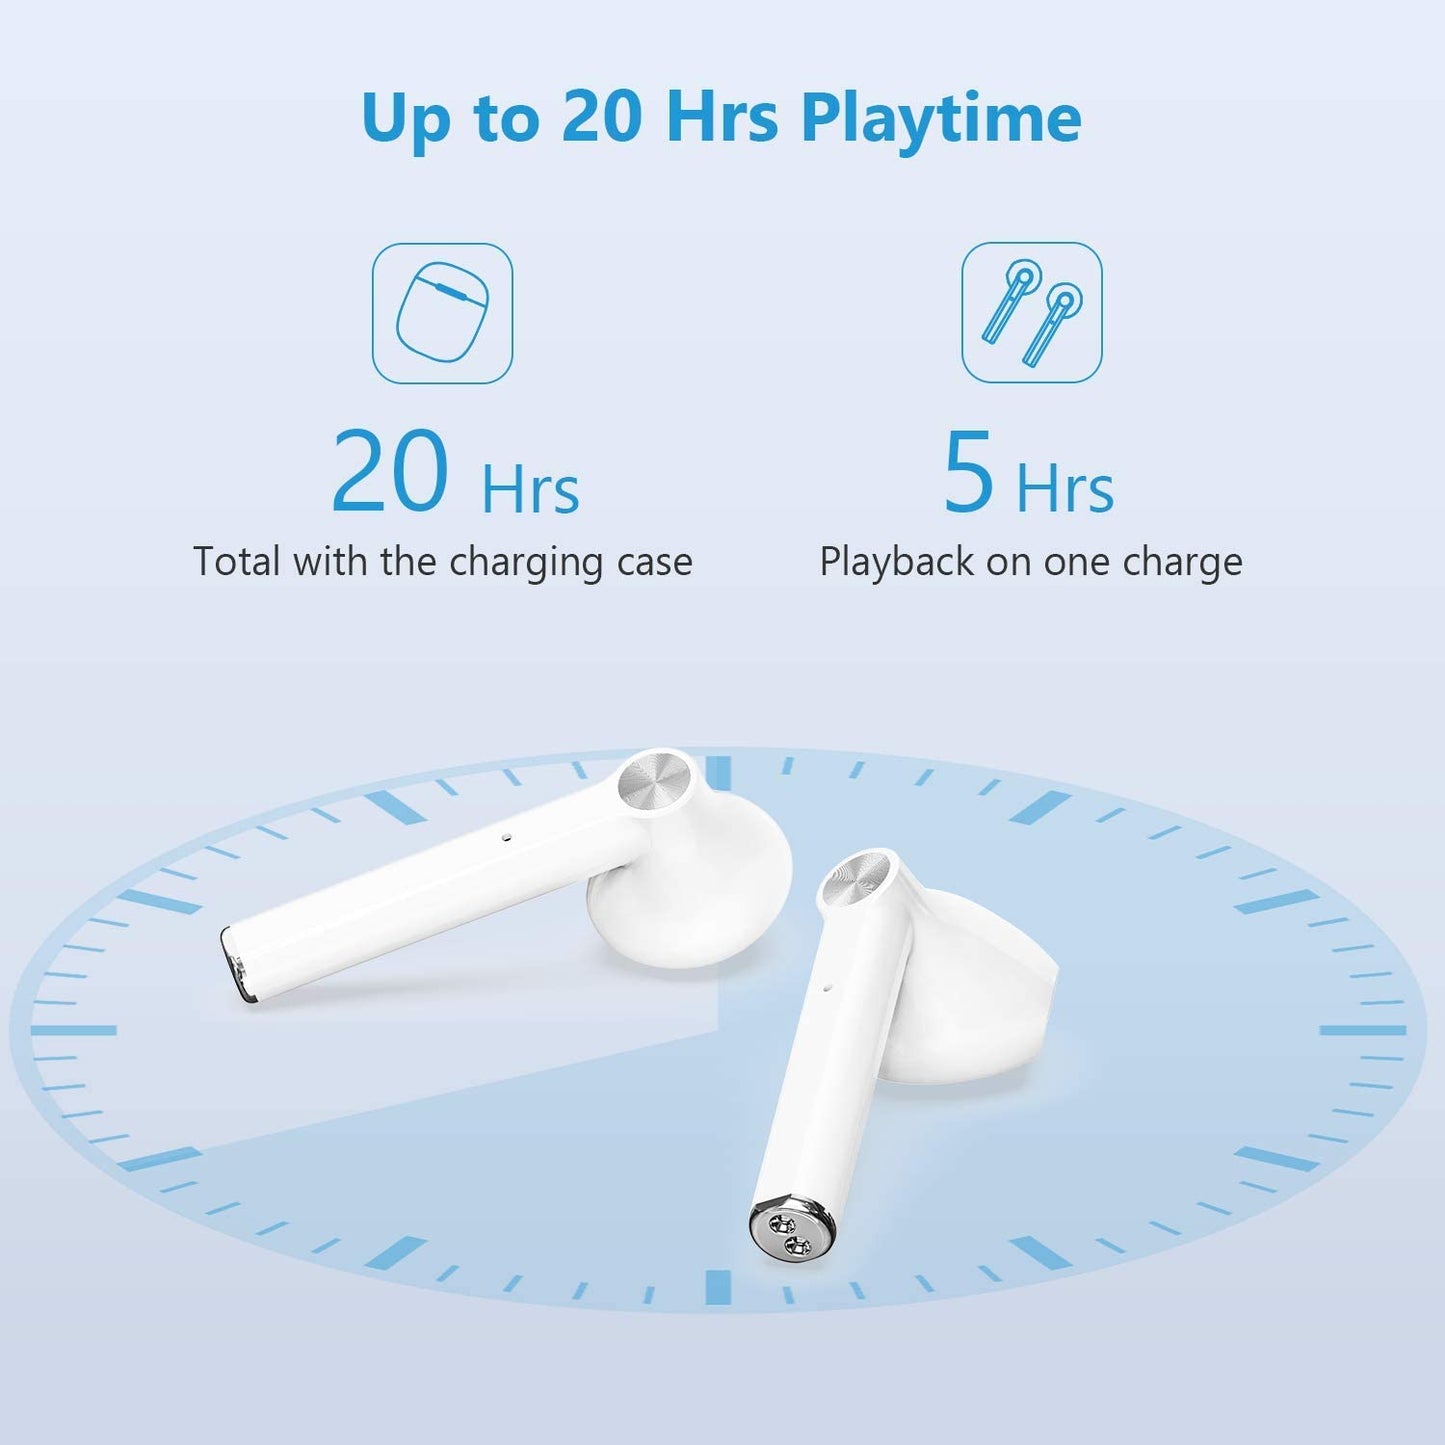 TWS Earphones Wireless Earbuds Headphones True Stereo Headset - ONXY6